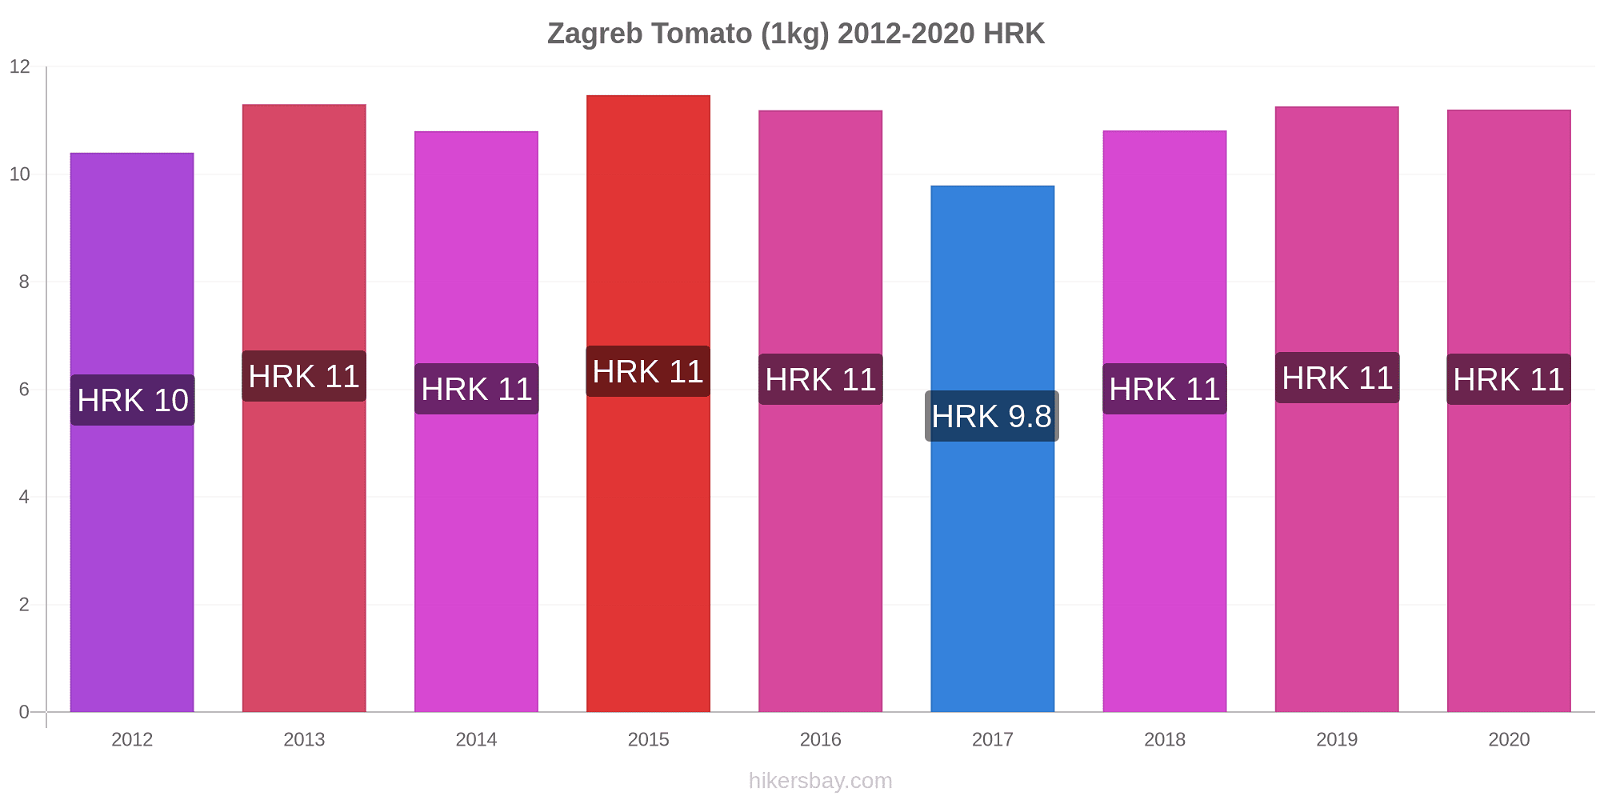 Zagreb price changes Tomato (1kg) hikersbay.com